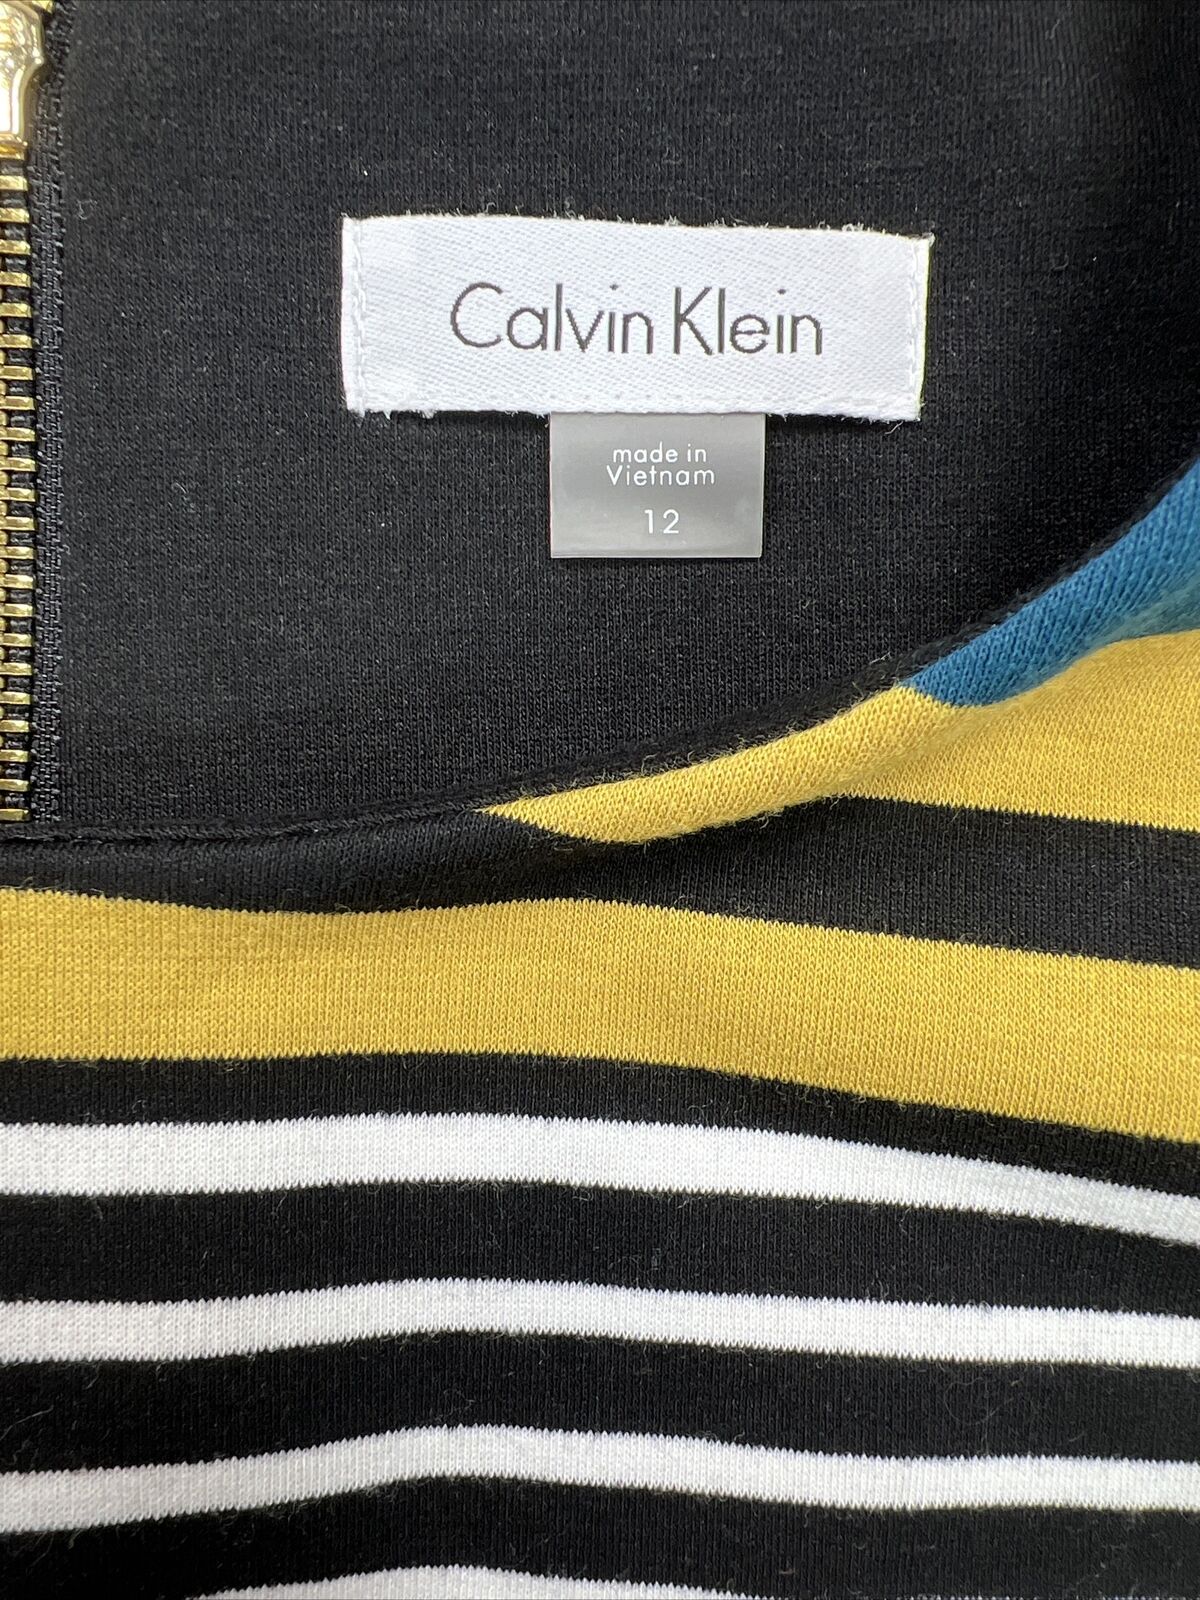 Calvin Klein Women's Black/Blue Striped Sleeveless Sheath Dress - 12